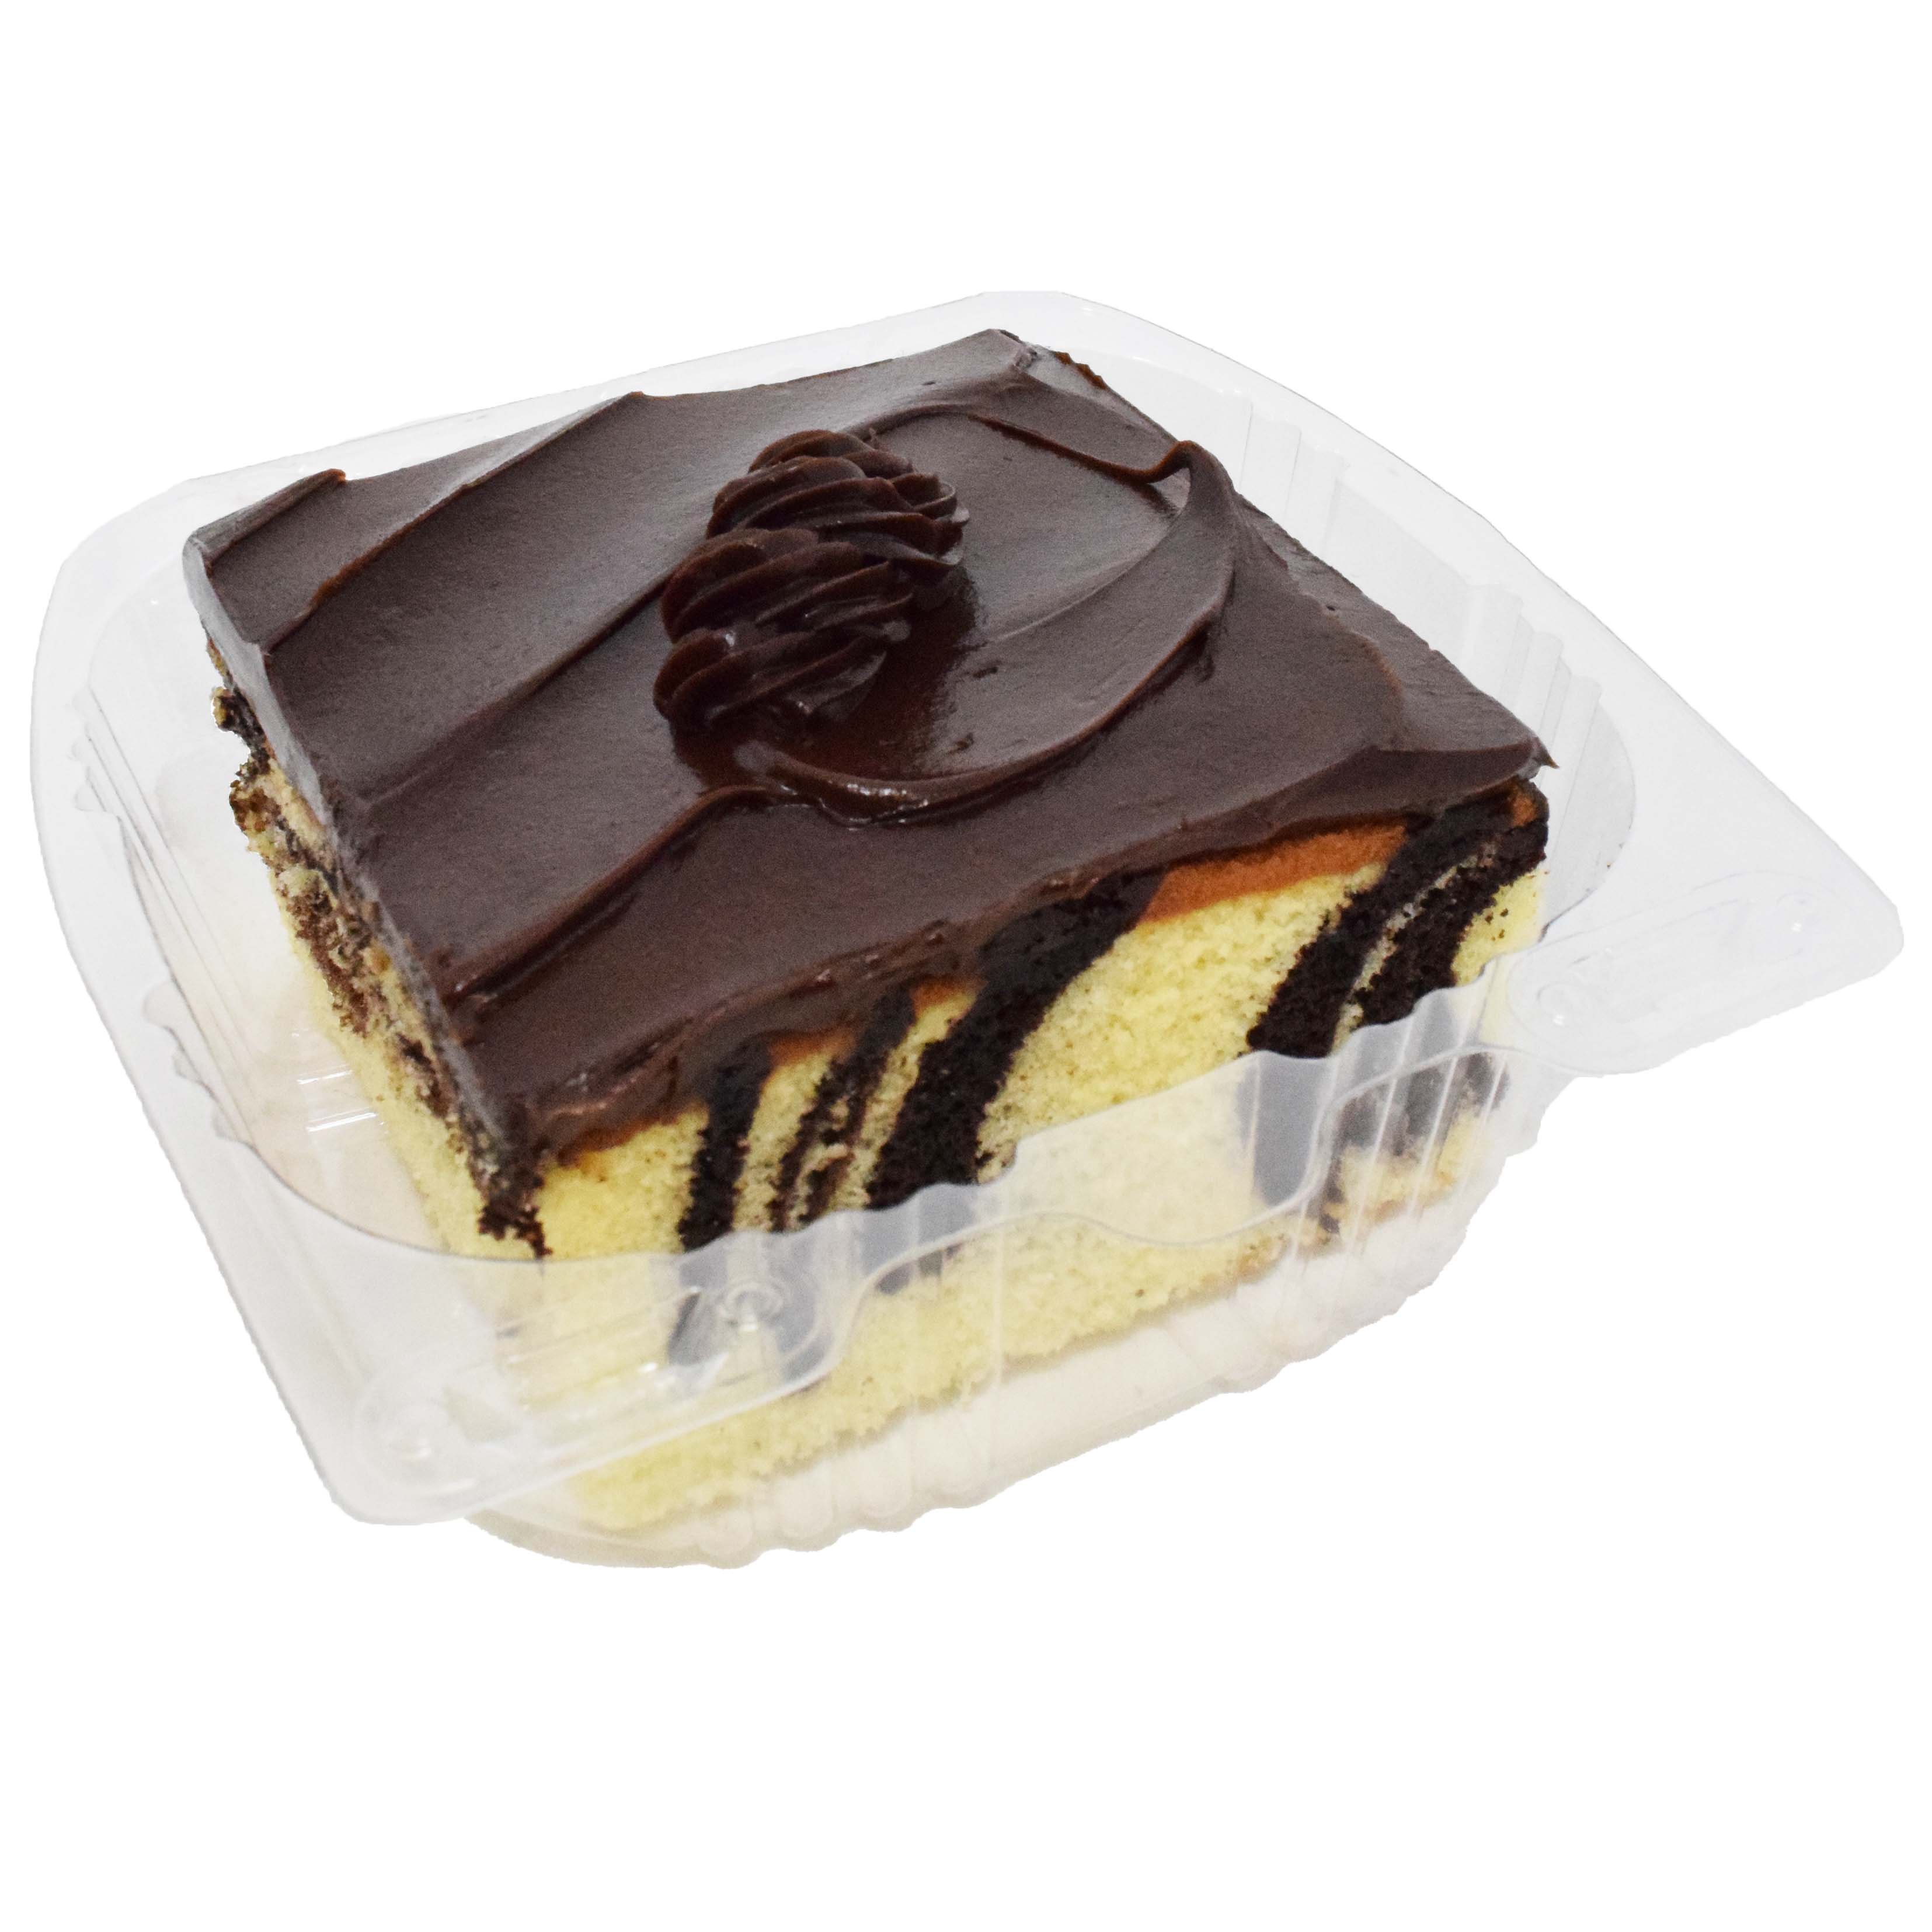 H-E-B Bakery Fudge Marble Cake Slice - Shop Standard Cakes at H-E-B